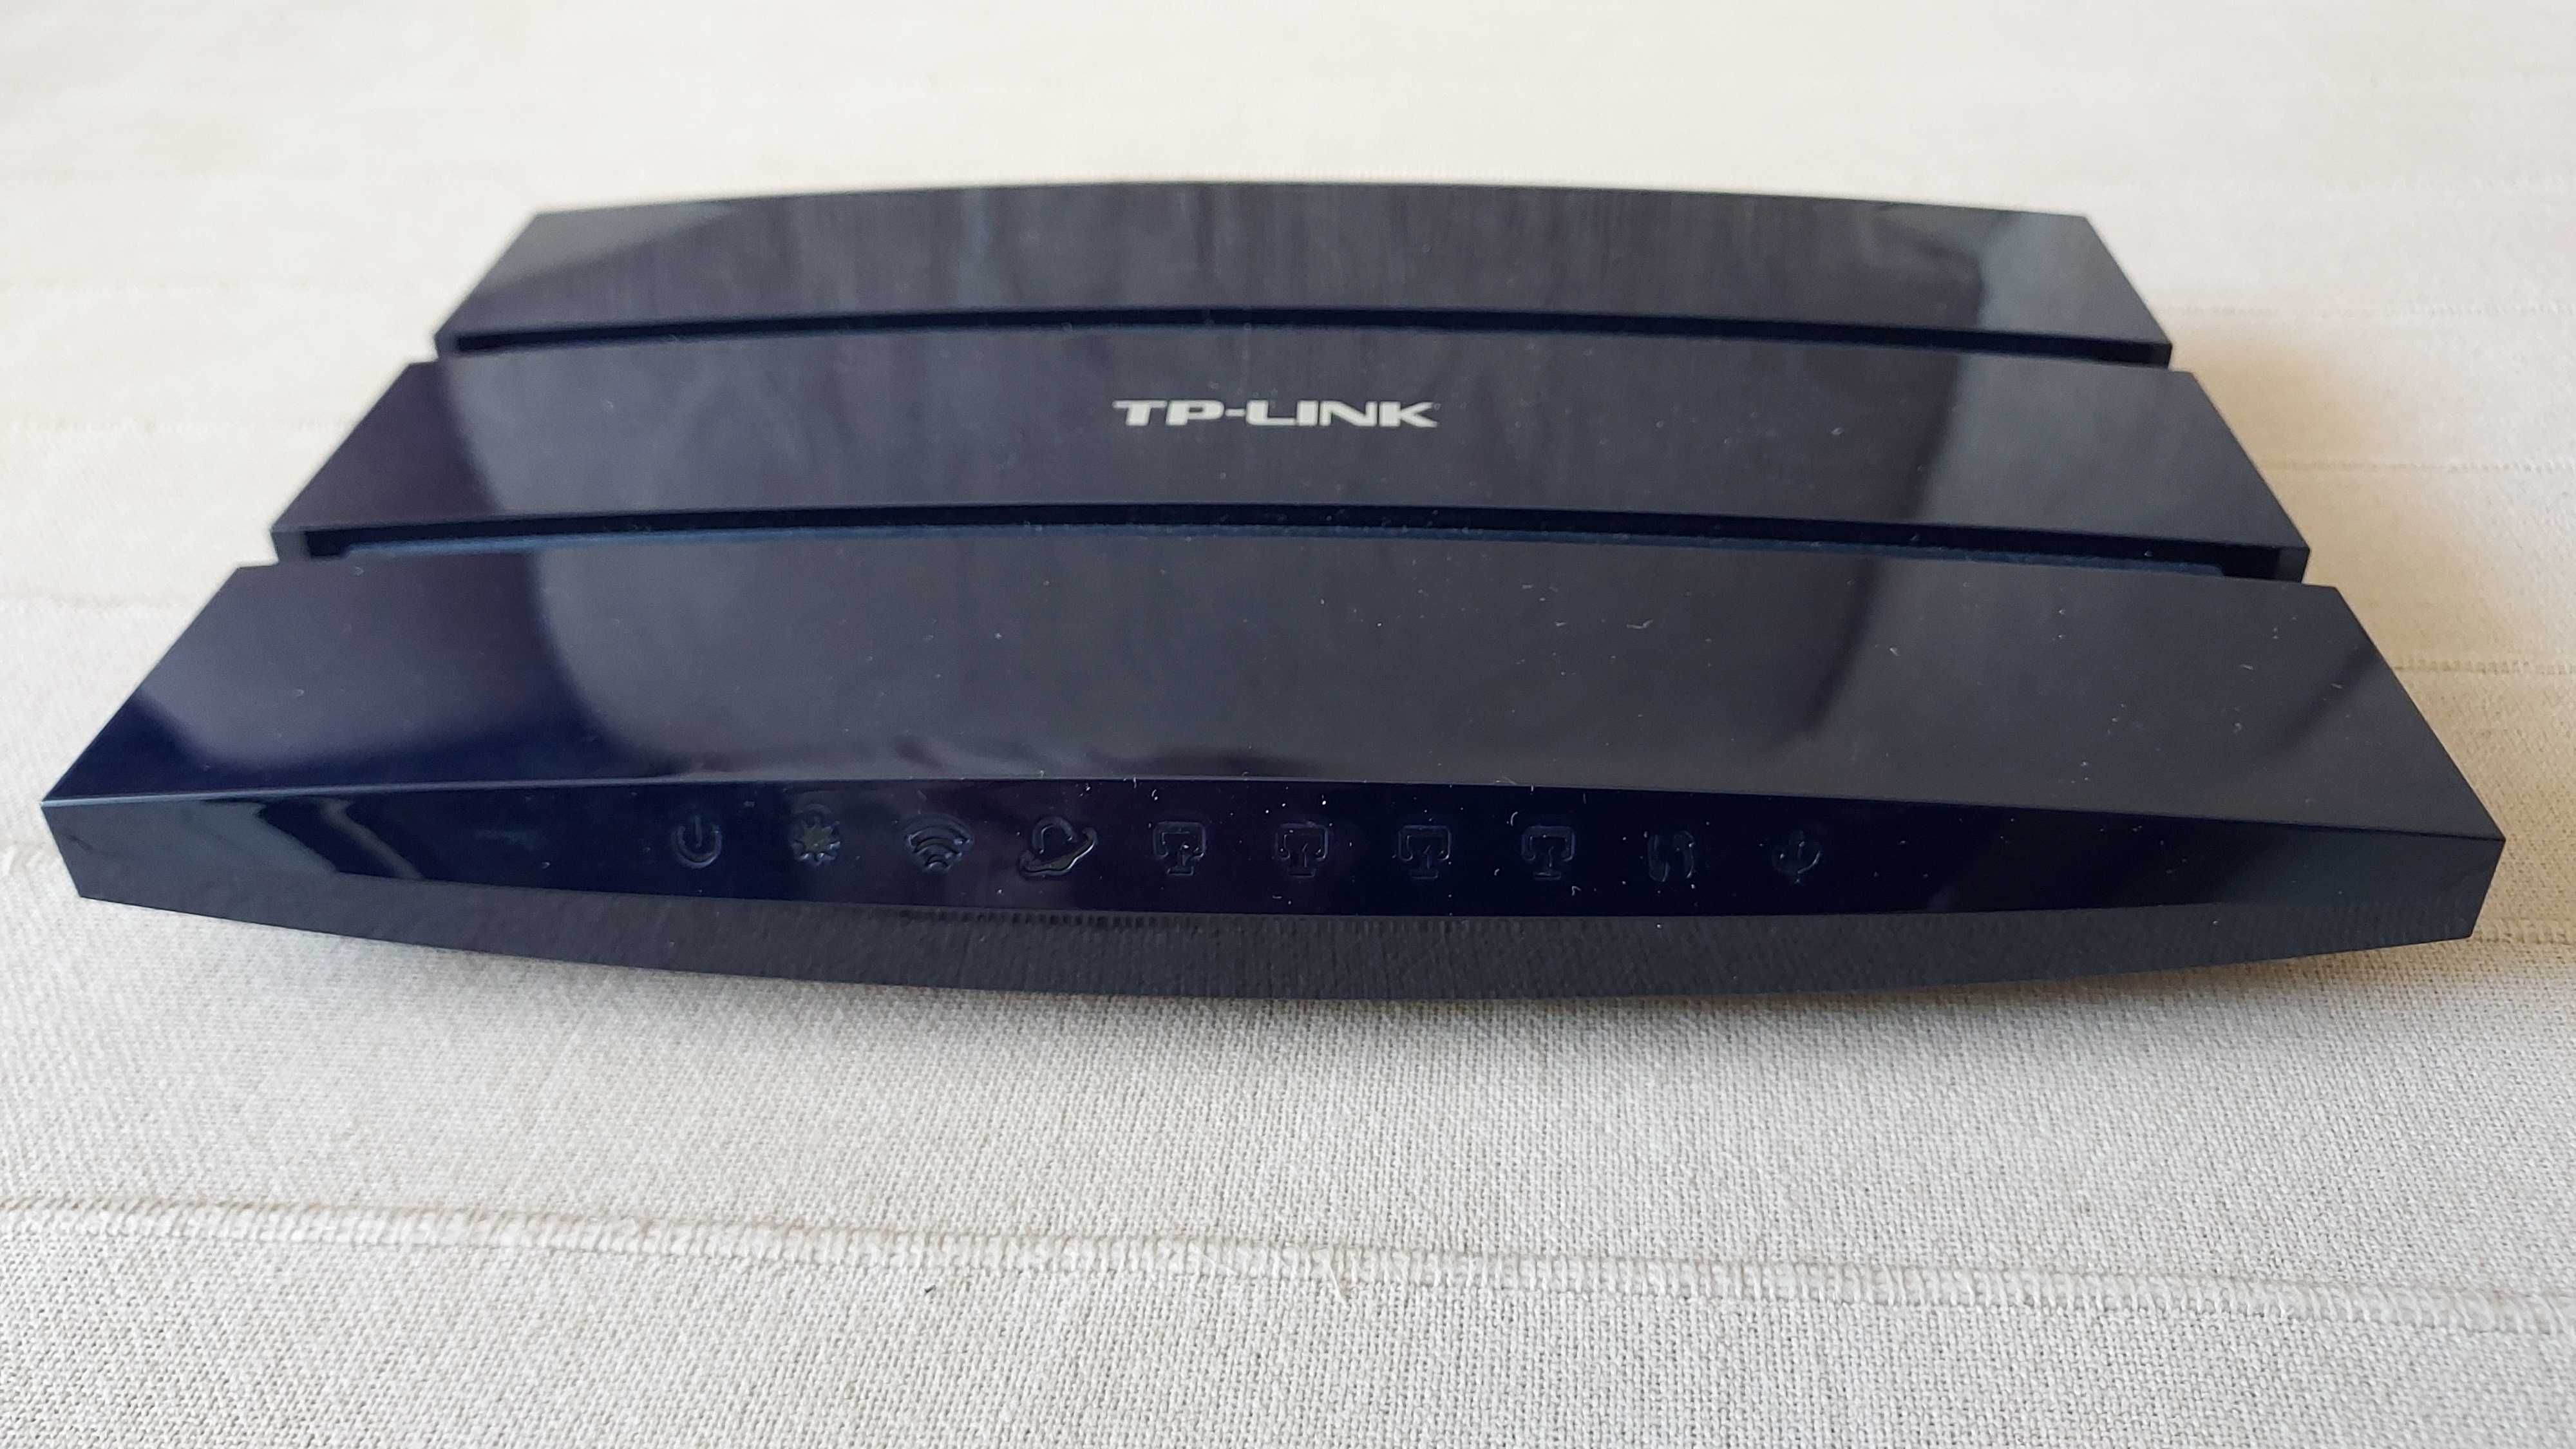 Router TP-LINK model TL-WR1043ND